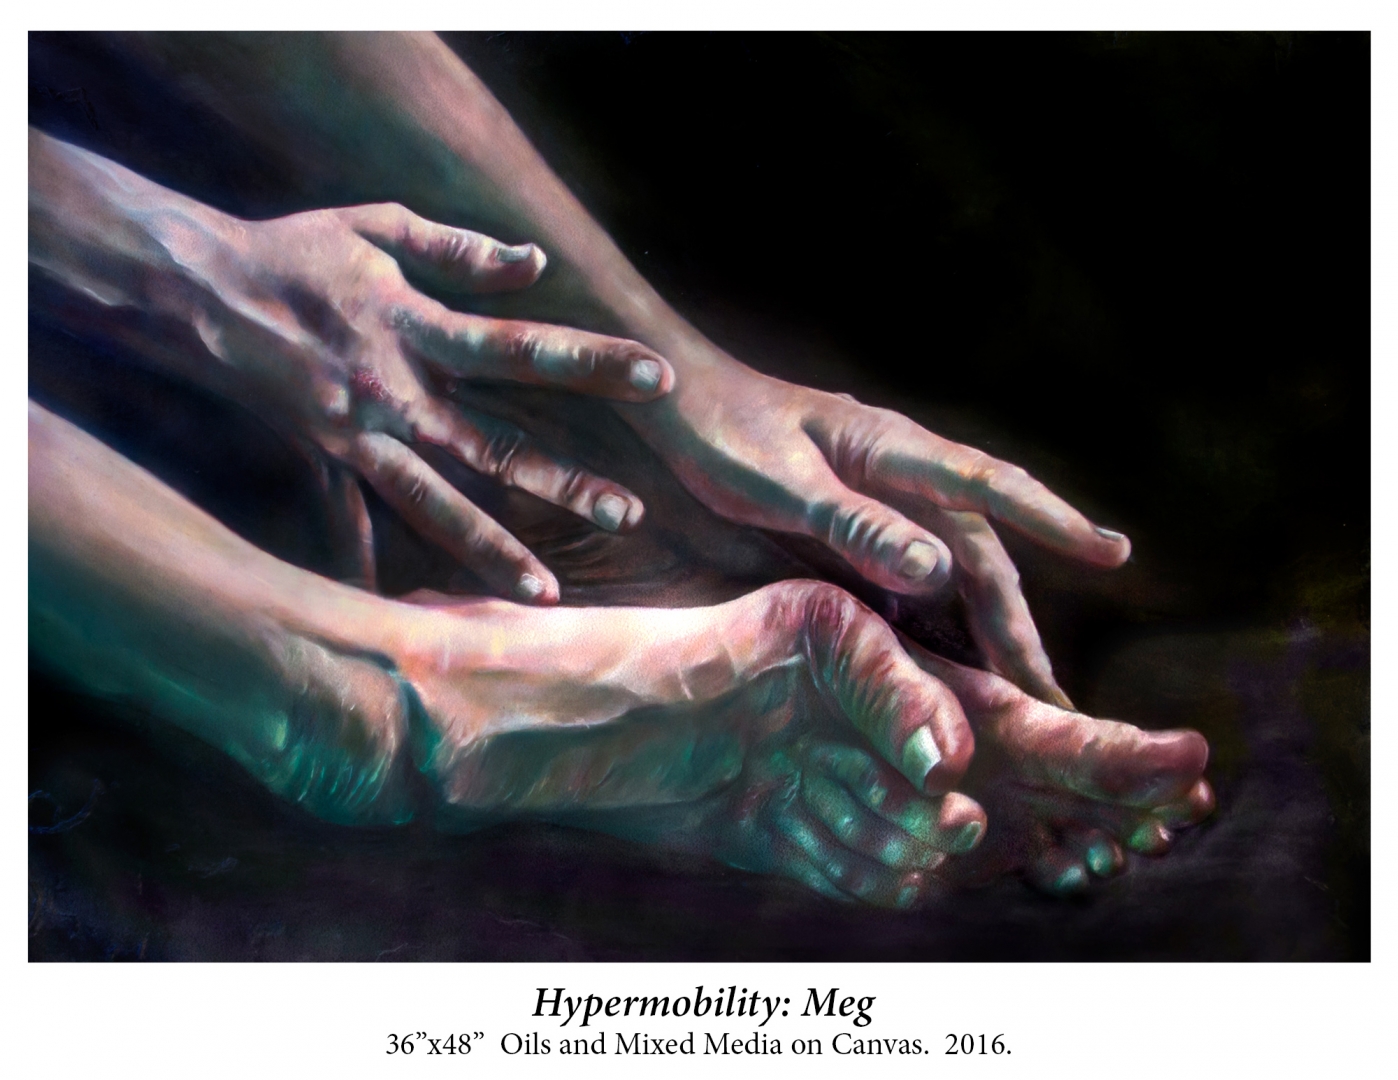 Hypermobility: Meg (by MANDEM)